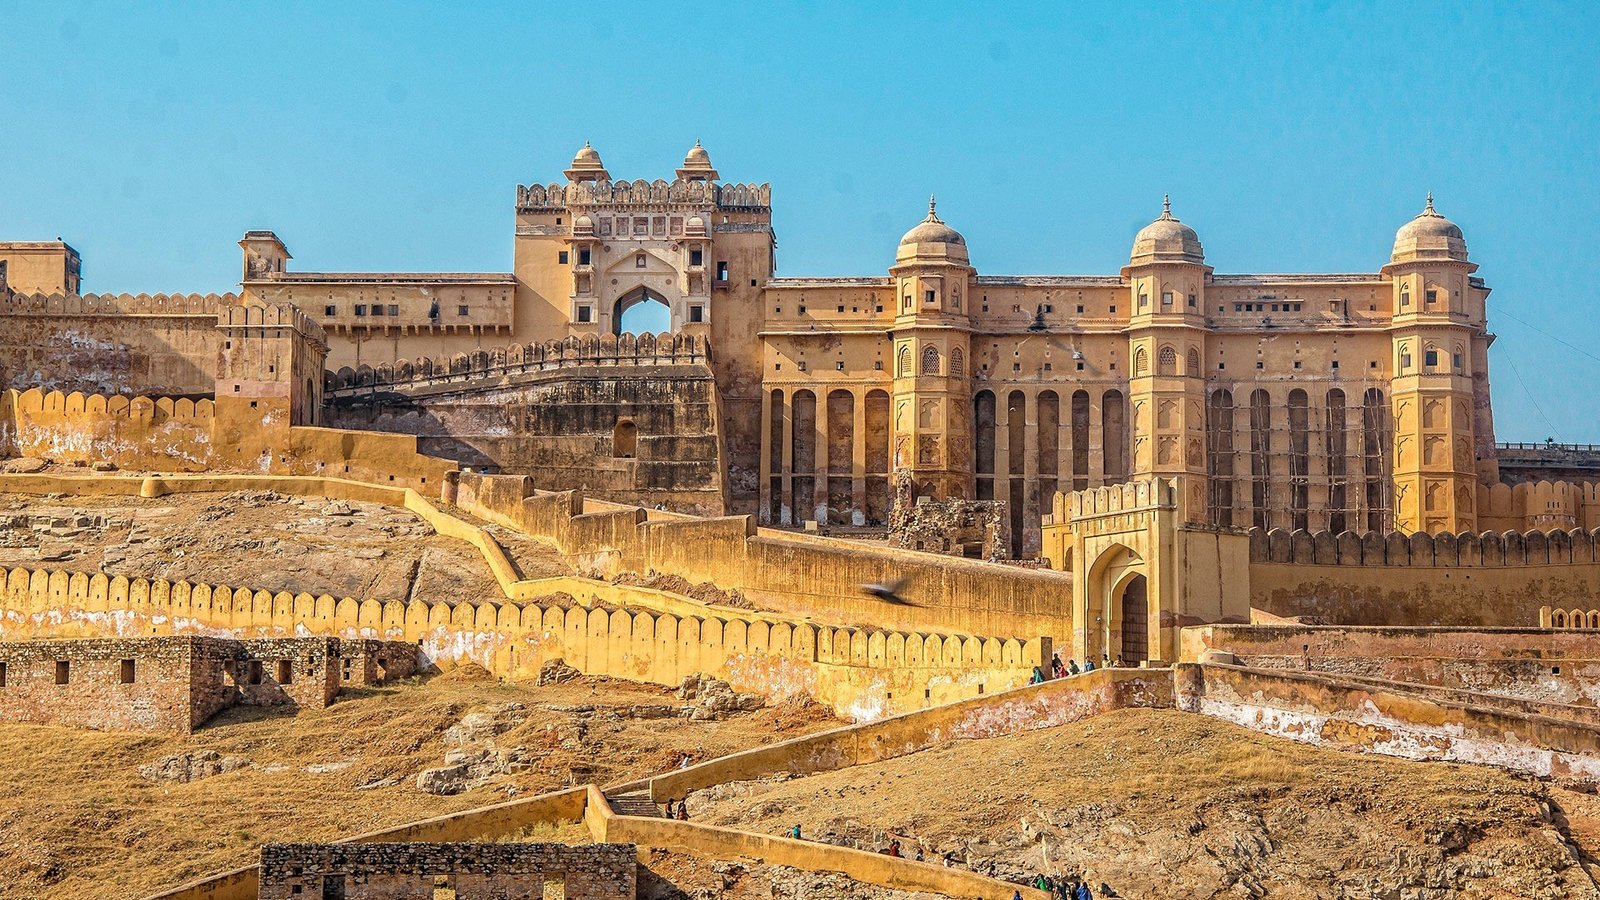 The Pink City – Jaipur